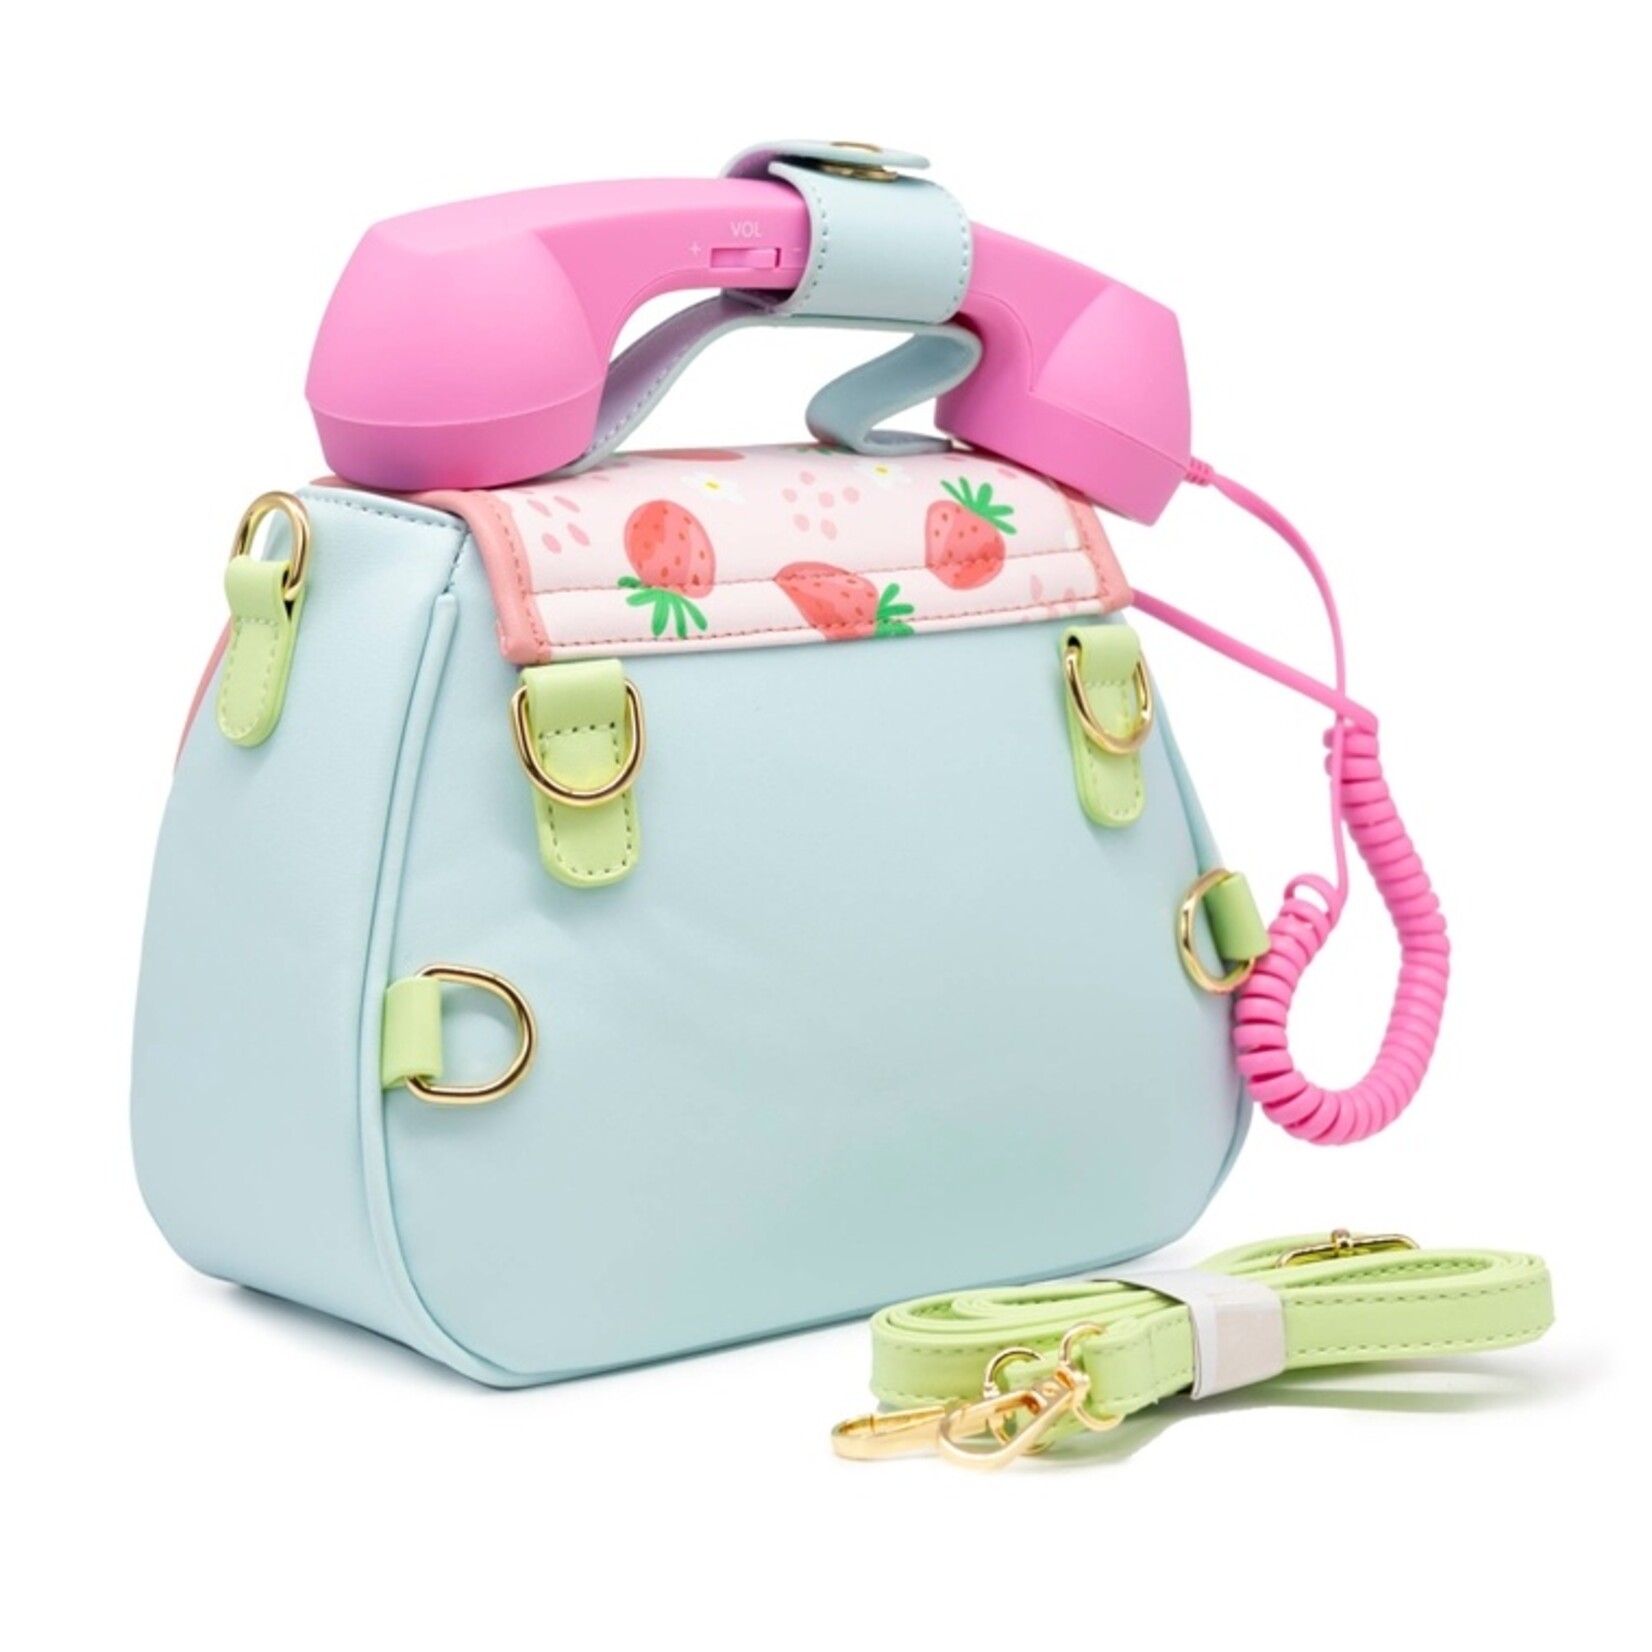 Phone Convertible Handbag in Strawberry Fields